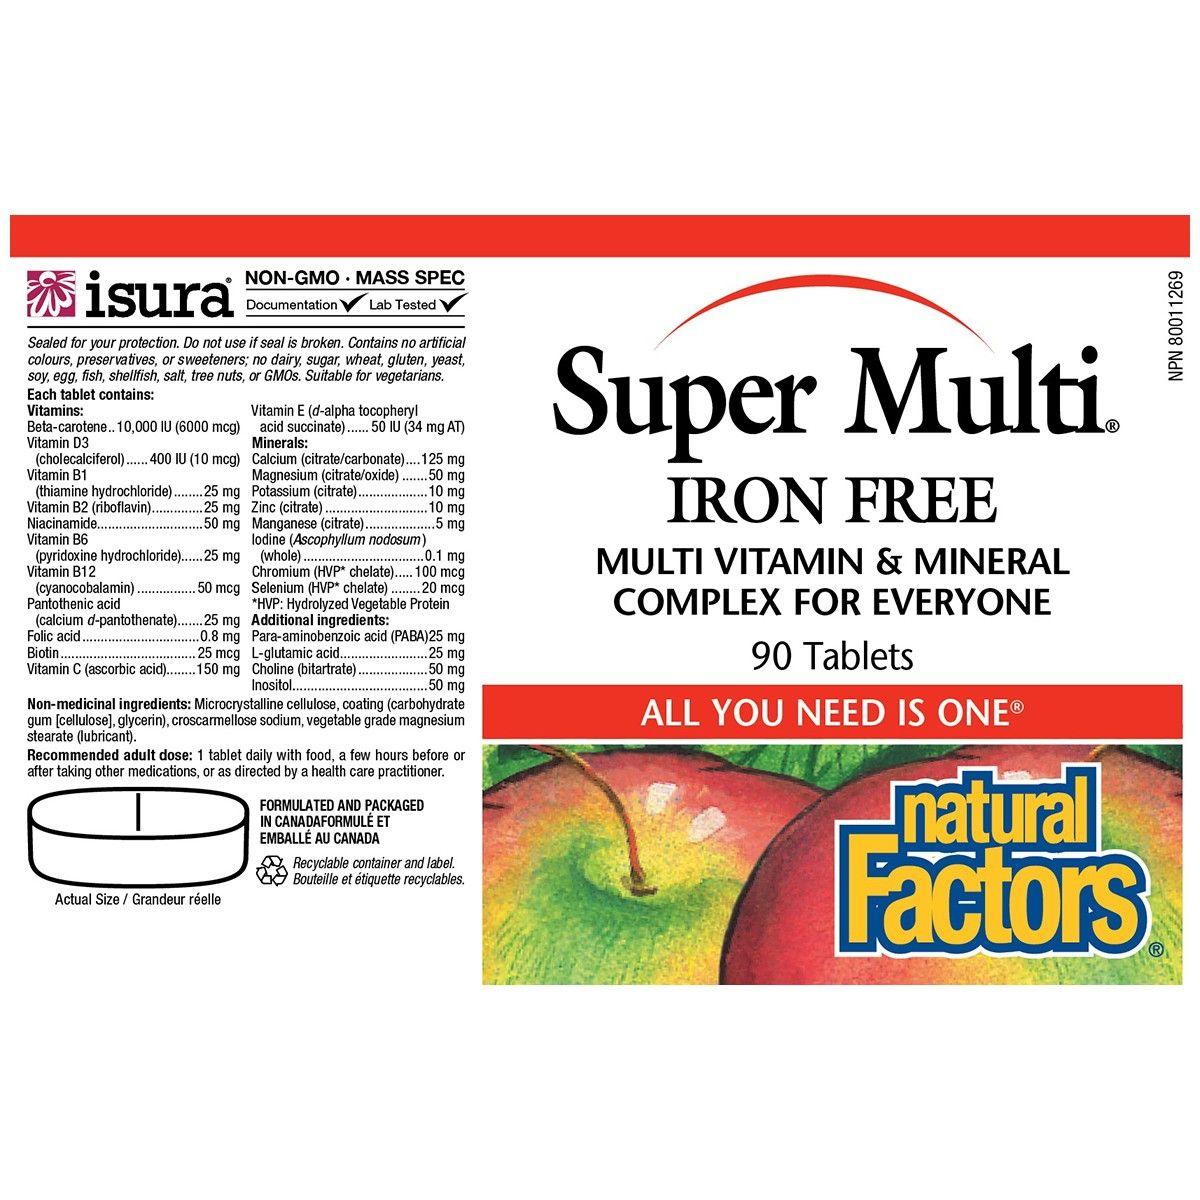 Natural Factors Super Multi Iron Free 90 Tabs Vitamins - Multivitamins at Village Vitamin Store